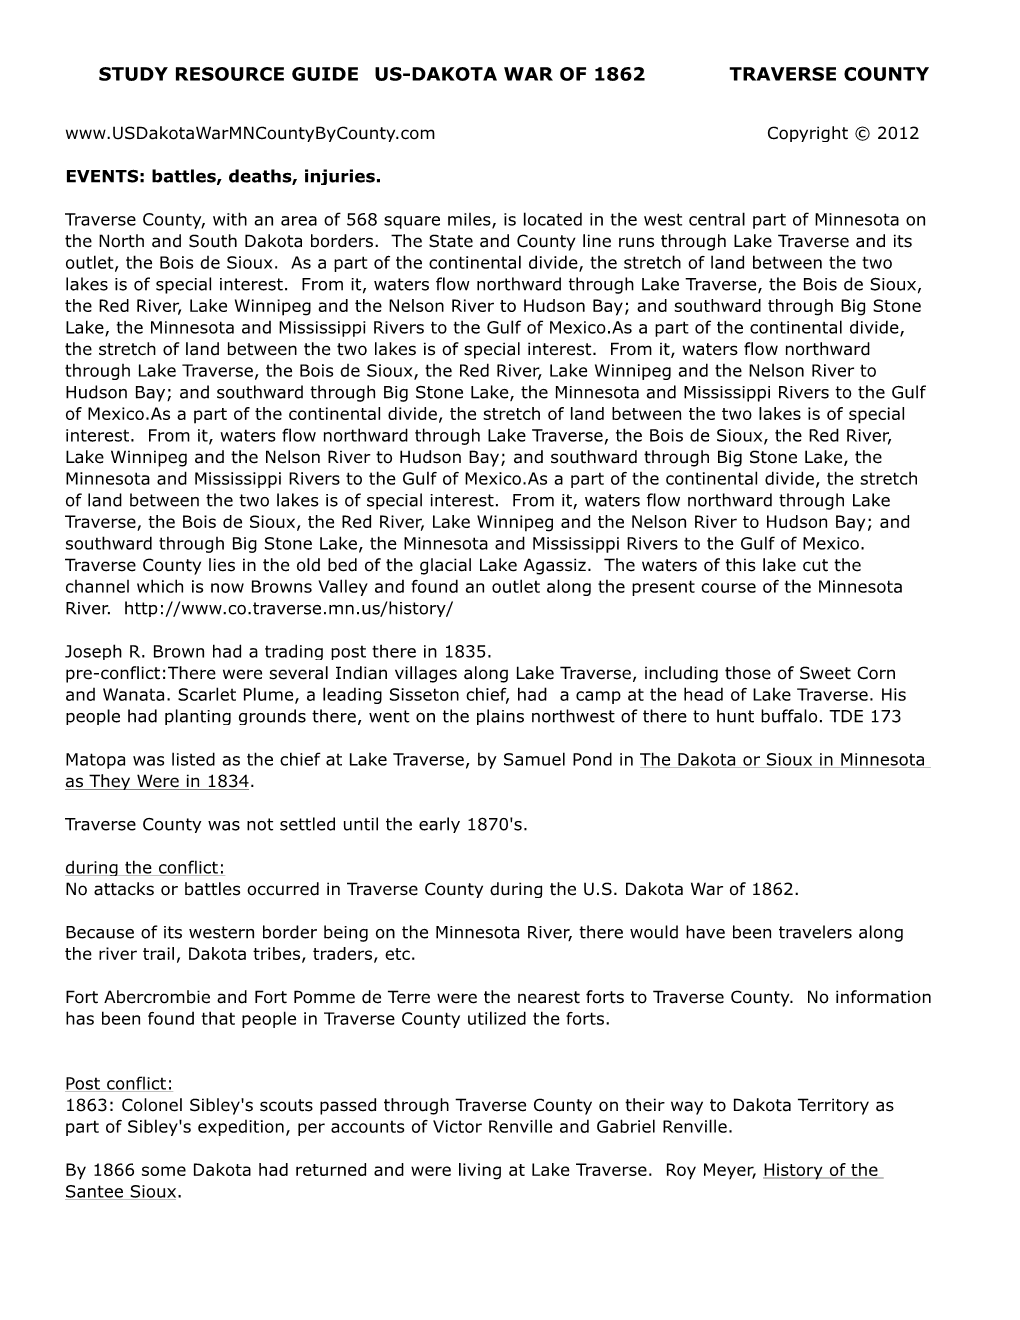 STUDY RESOURCE GUIDE US-DAKOTA WAR of 1862 TRAVERSE COUNTY Copyright © 2012